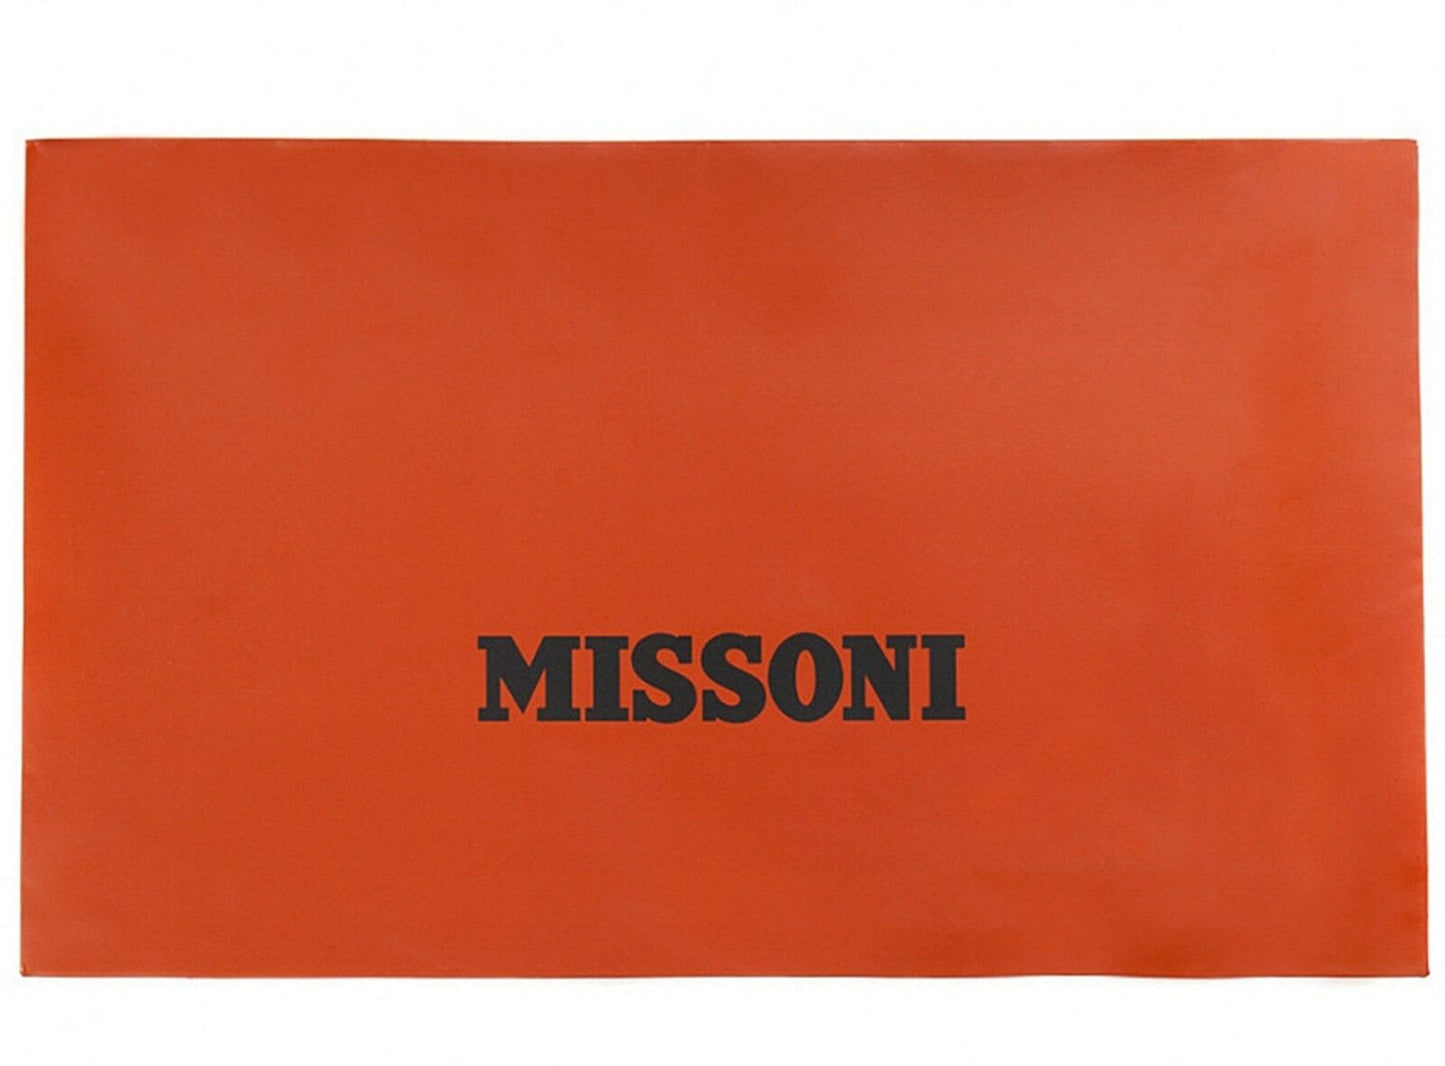 Missoni Pink Red Open Weave Large Oblong Fringe Orange Label Scarf Wrap NWT